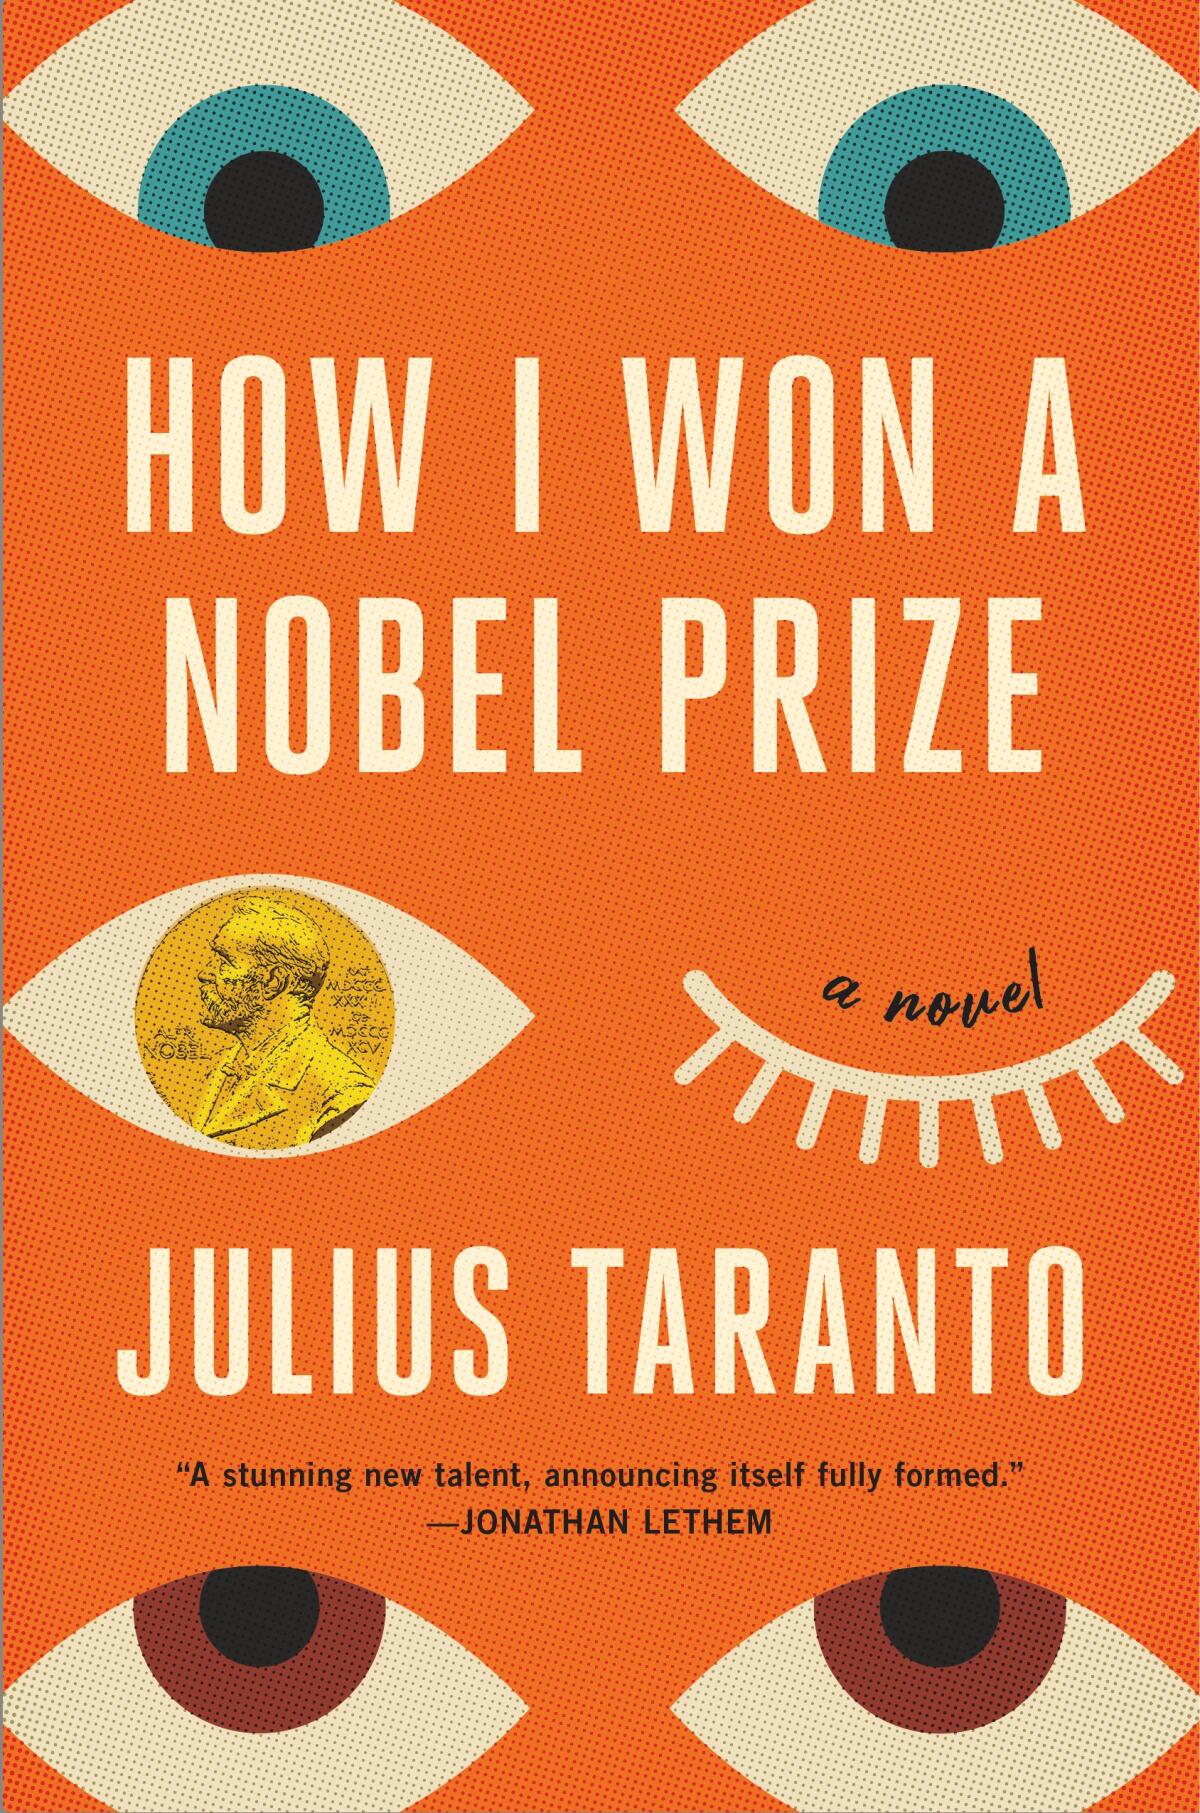 "How I Won a Nobel Prize," by Julius Taranto